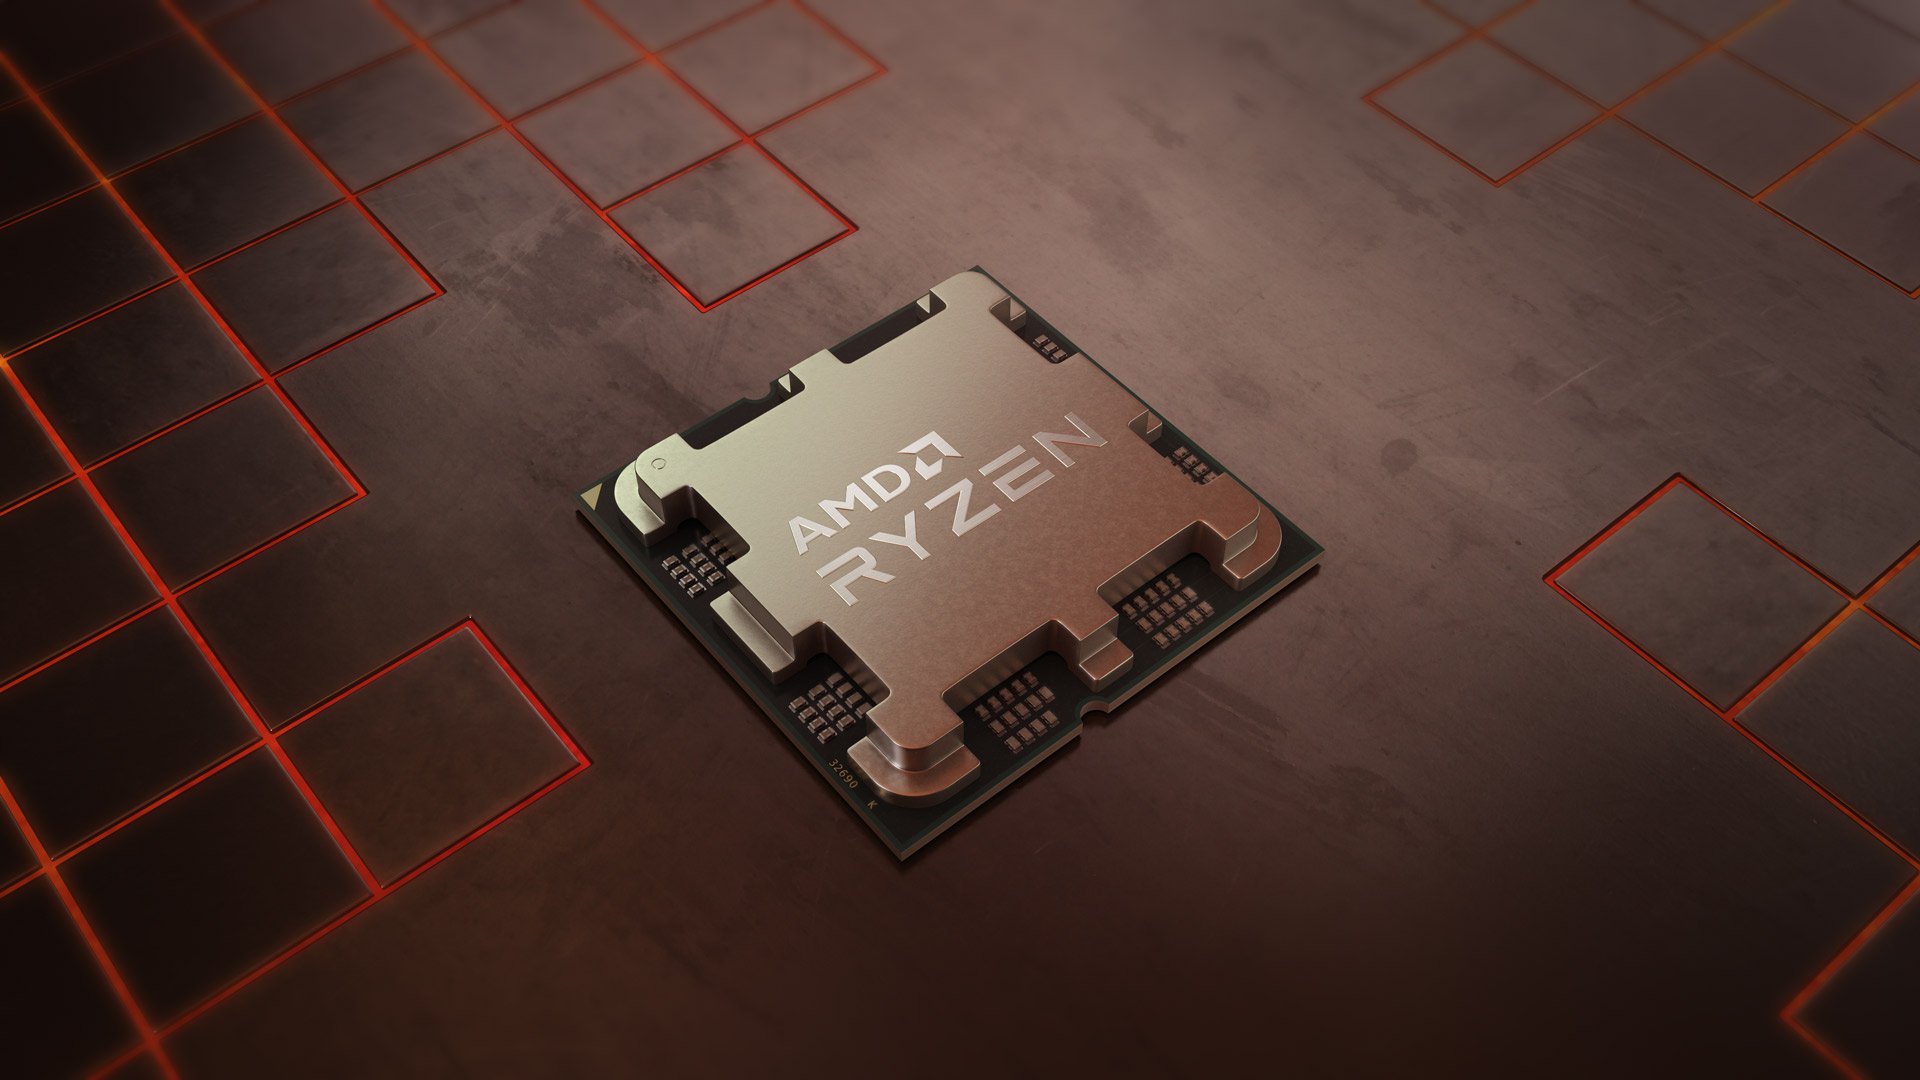 AMD Ryzen 5 5600 vs 5600X vs 5600G